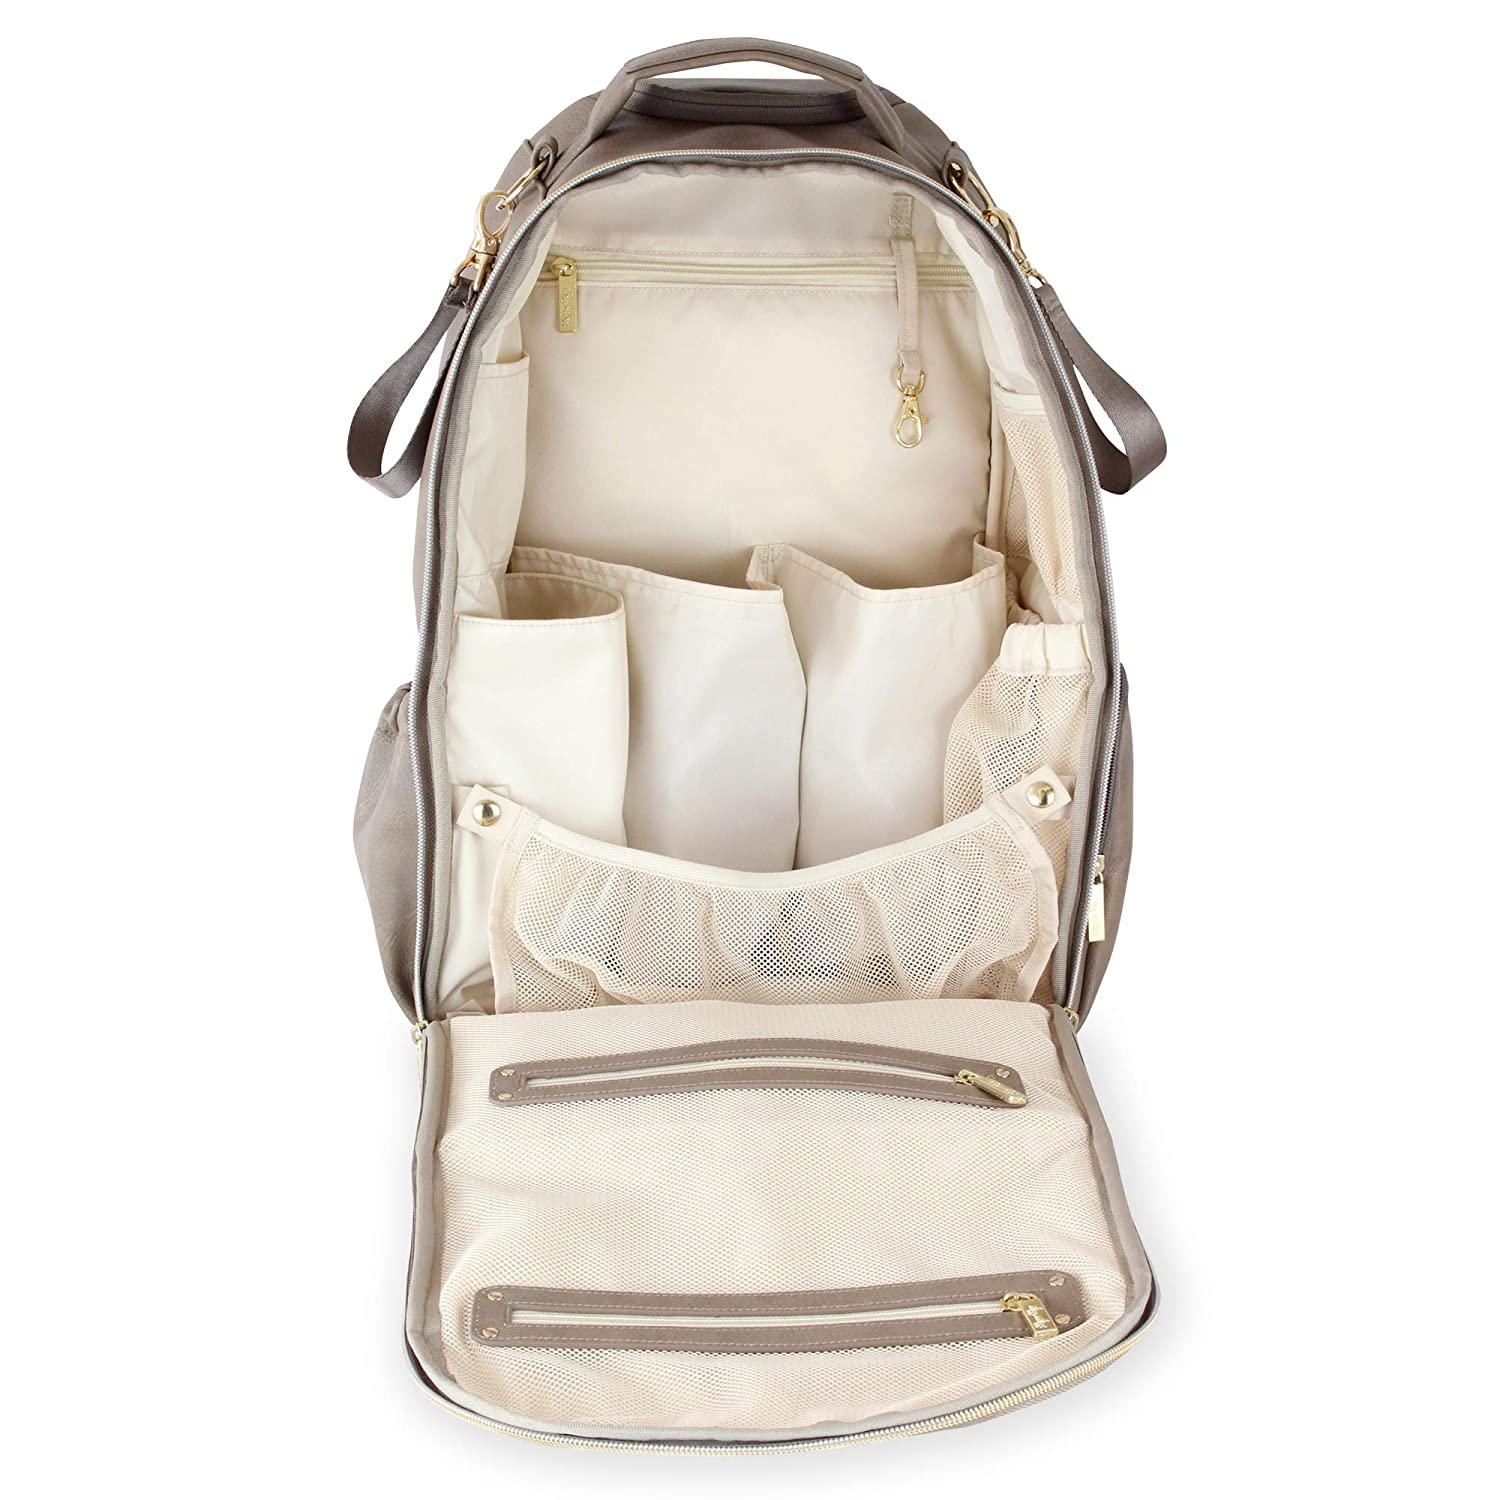 Itzy Ritzy Backpack Diaper Bag Boss Plus - Vanilla Latte